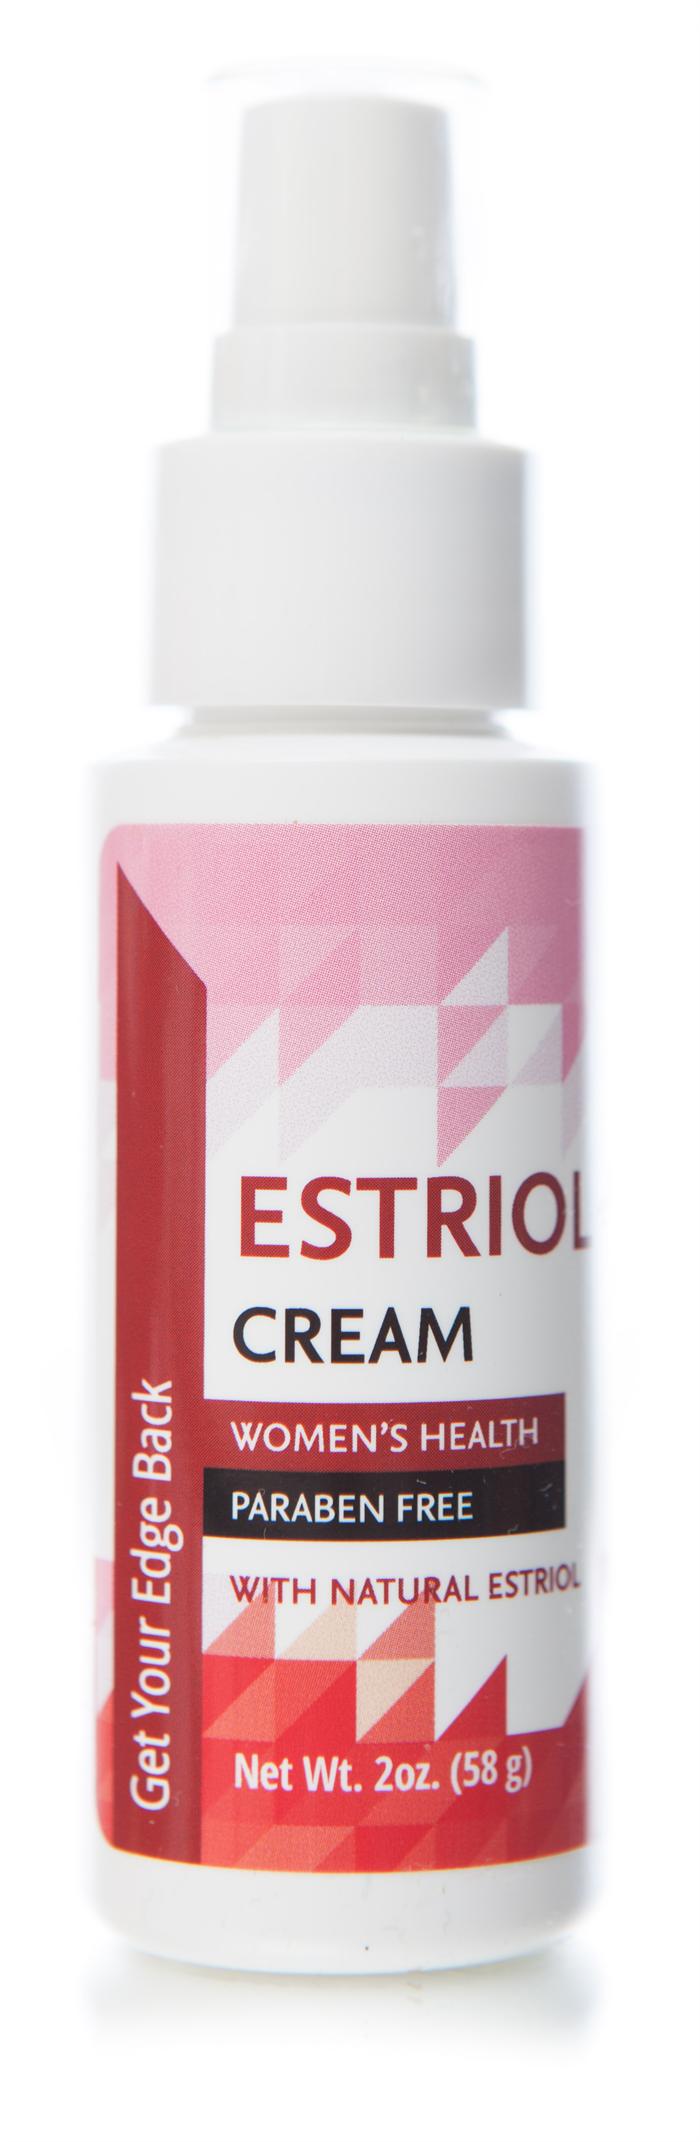 what is estriol